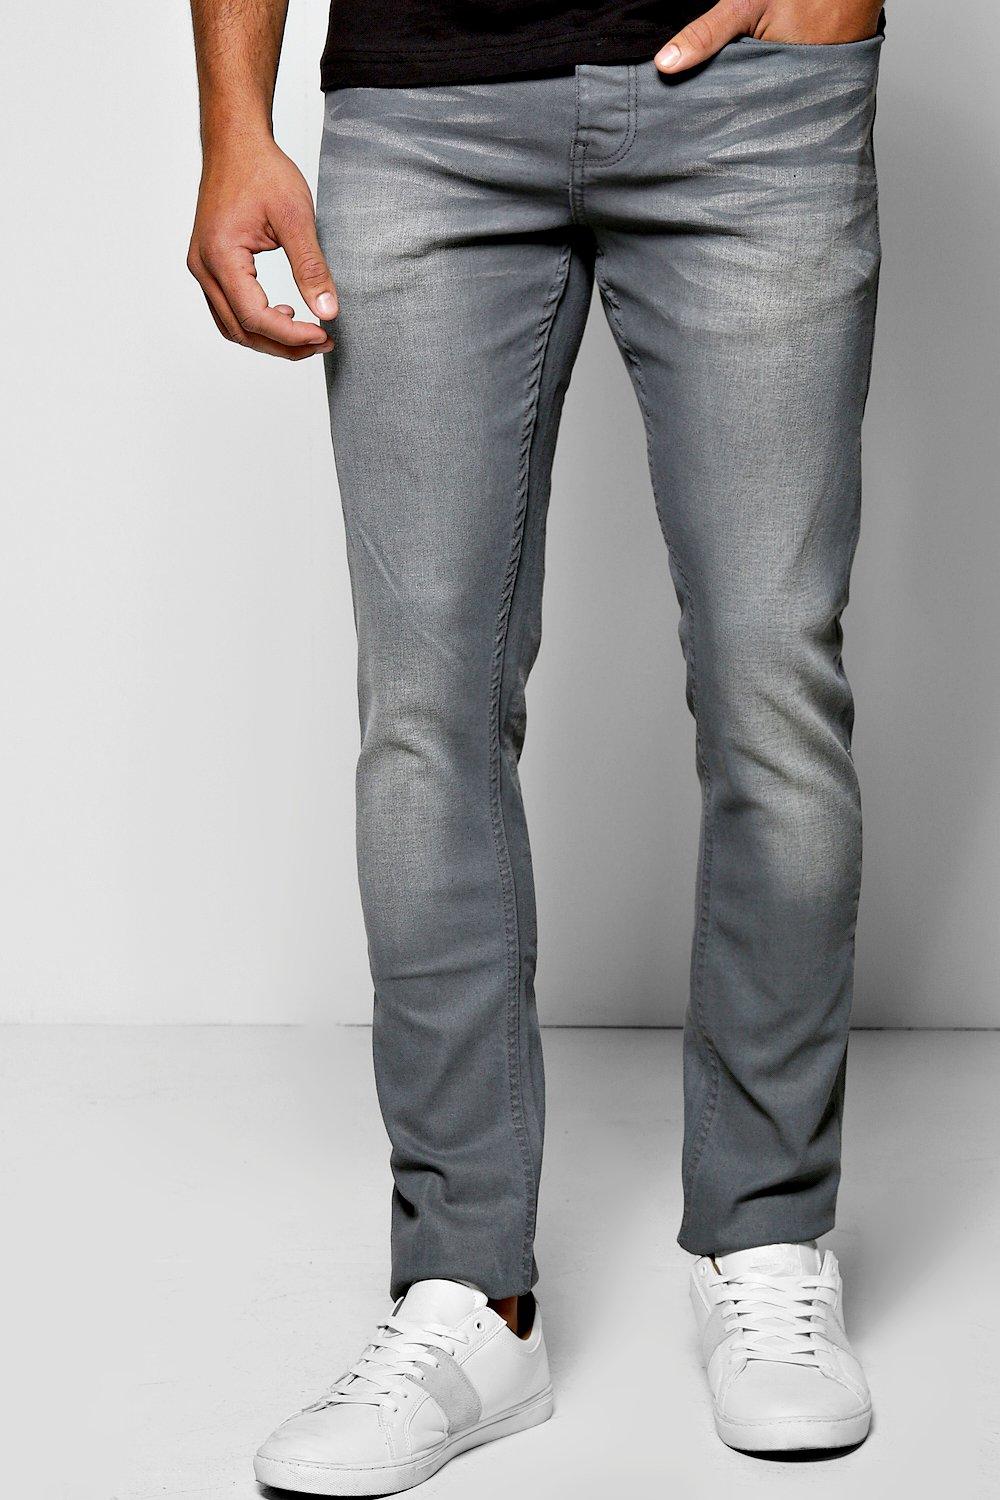 slate grey jeans